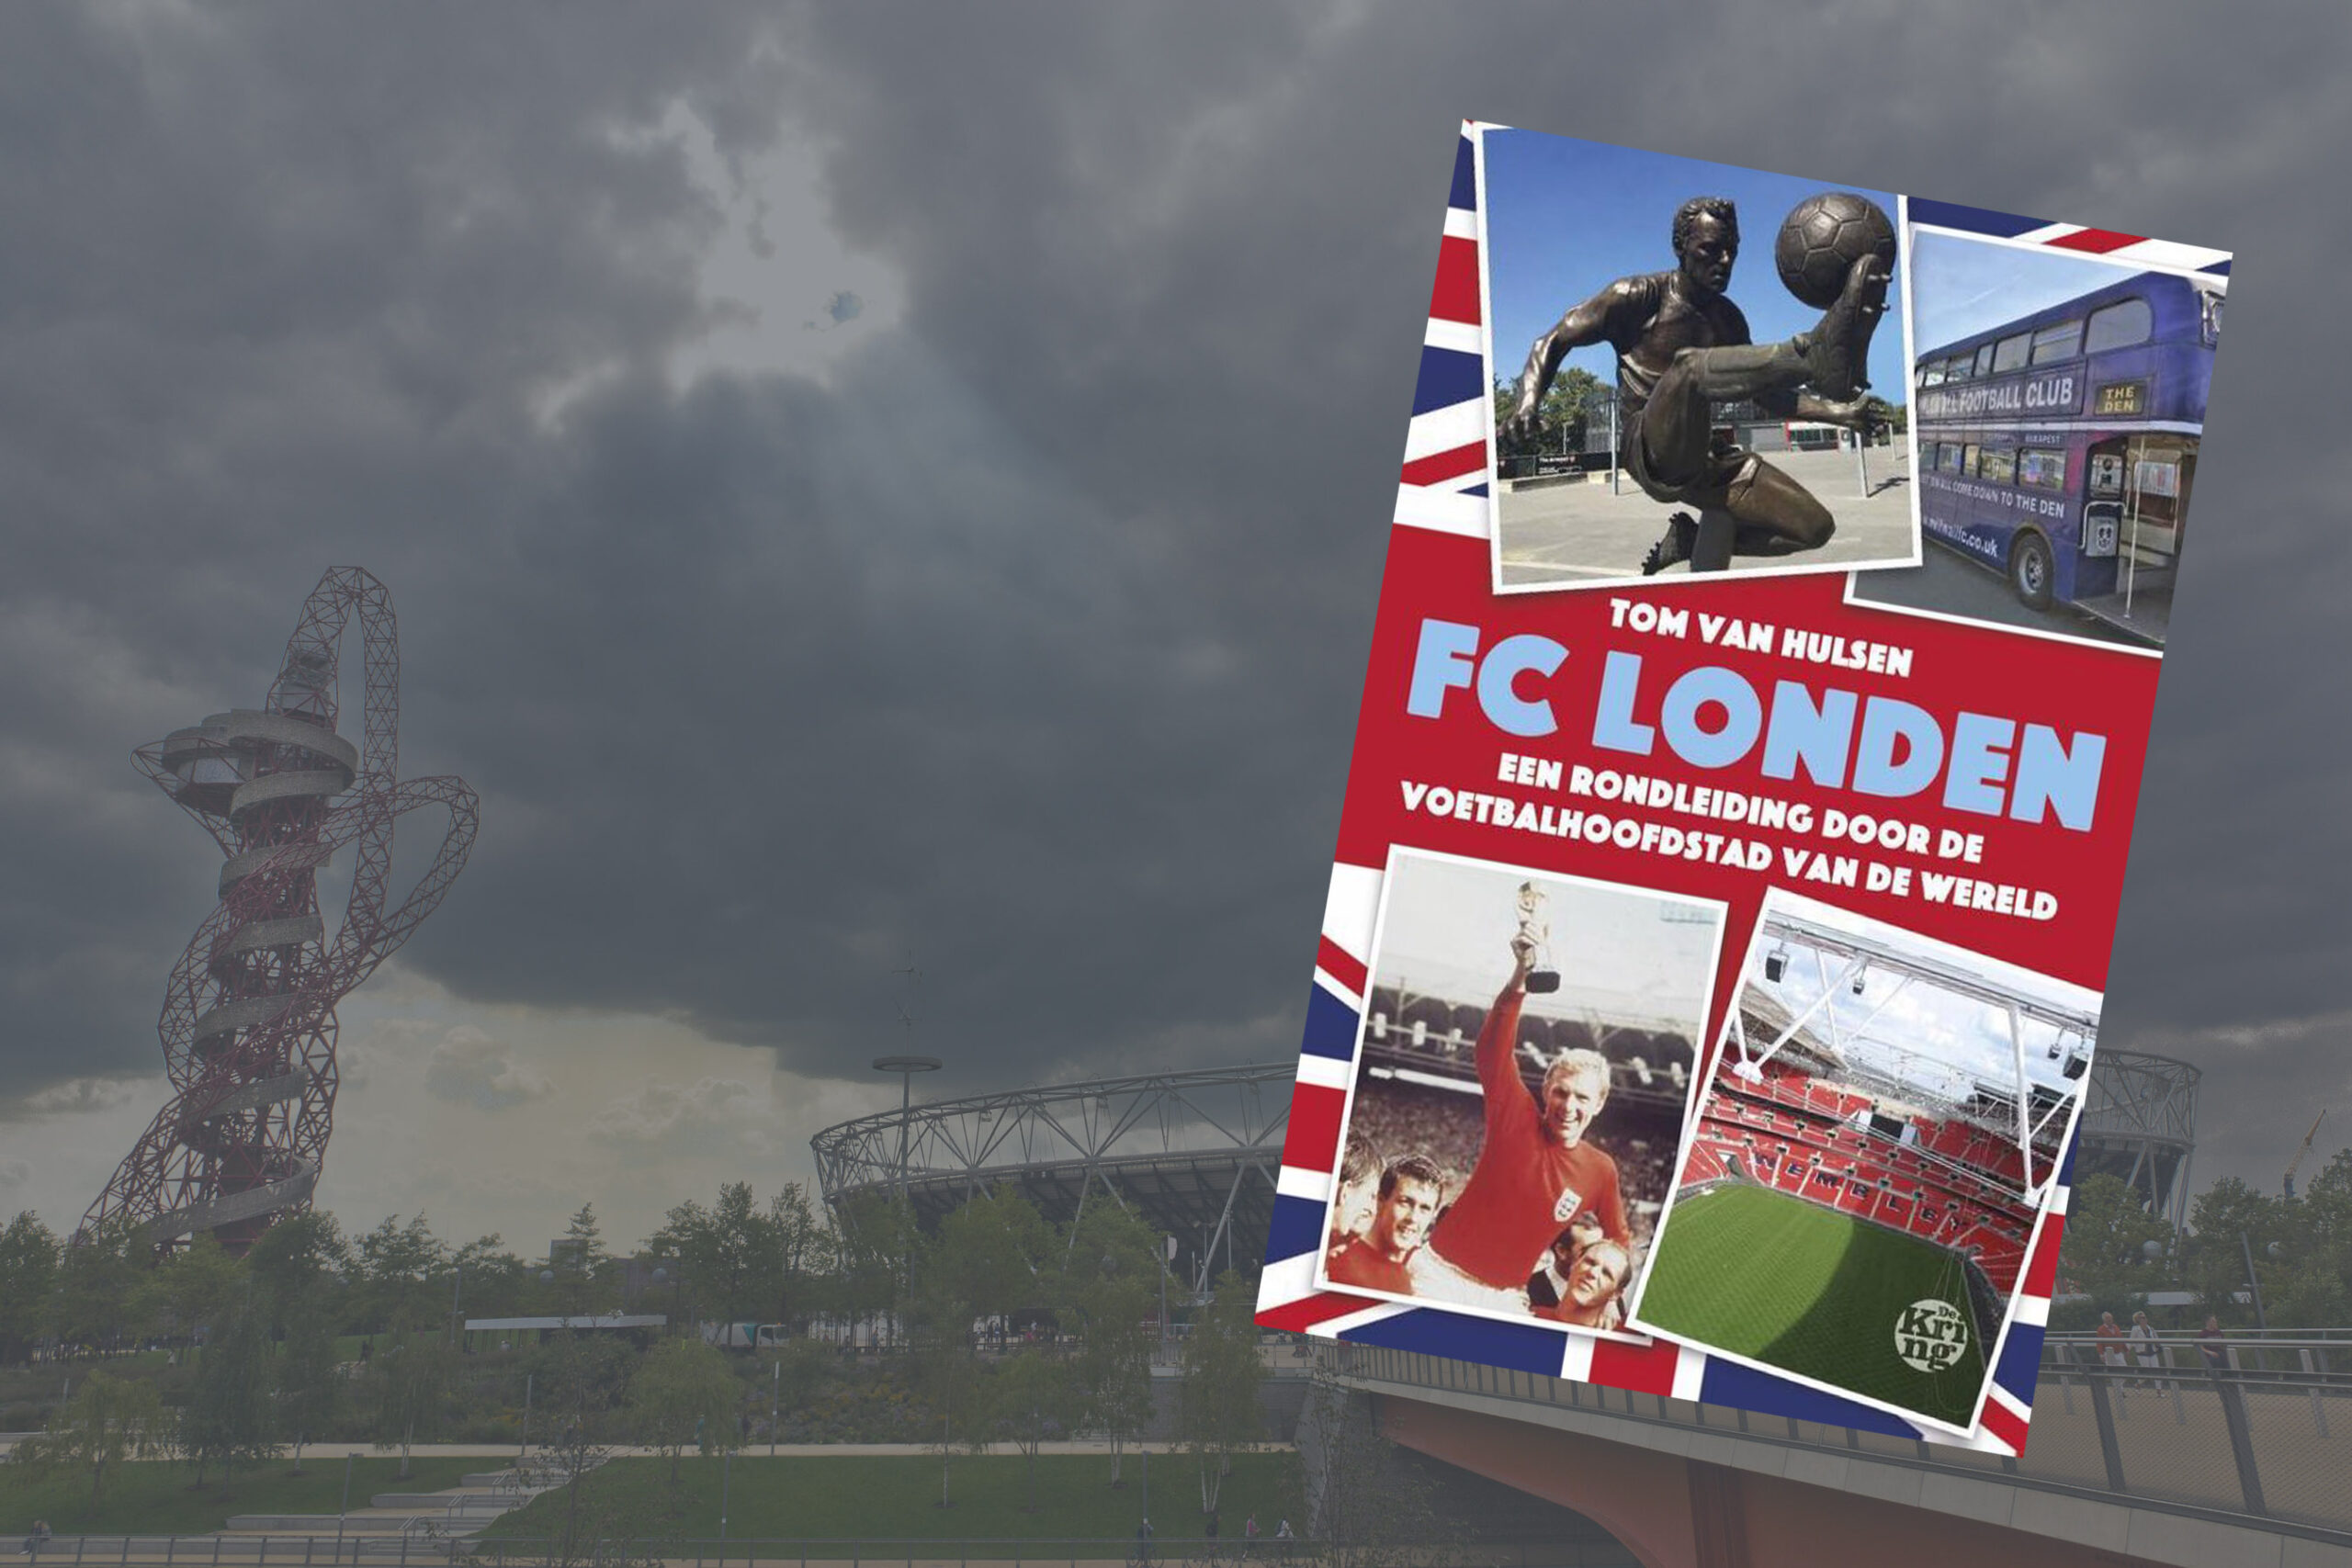 Boekrecensie: FC Londen – Tom van Hulsen